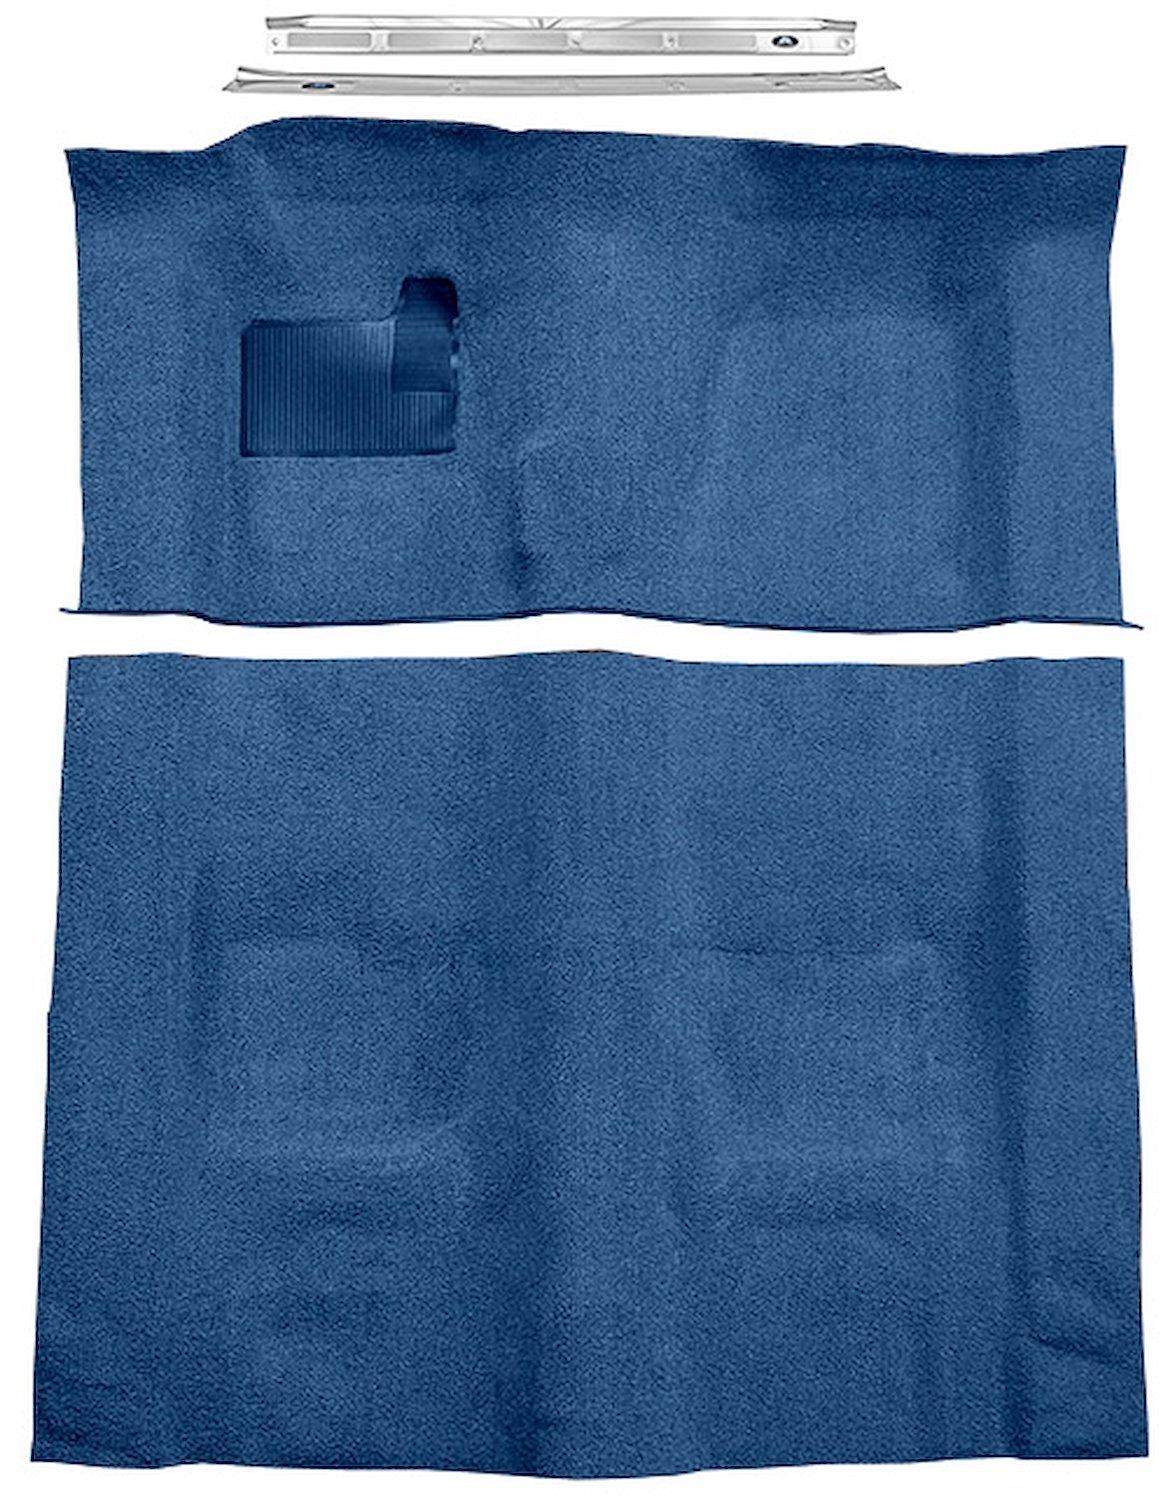 Medium Blue Molded Cut Pile Carpet Kit w/Door Sill Plates for 1970-1973 Chevy Camaro, Pontiac Firebird [4-Speed Transmission]